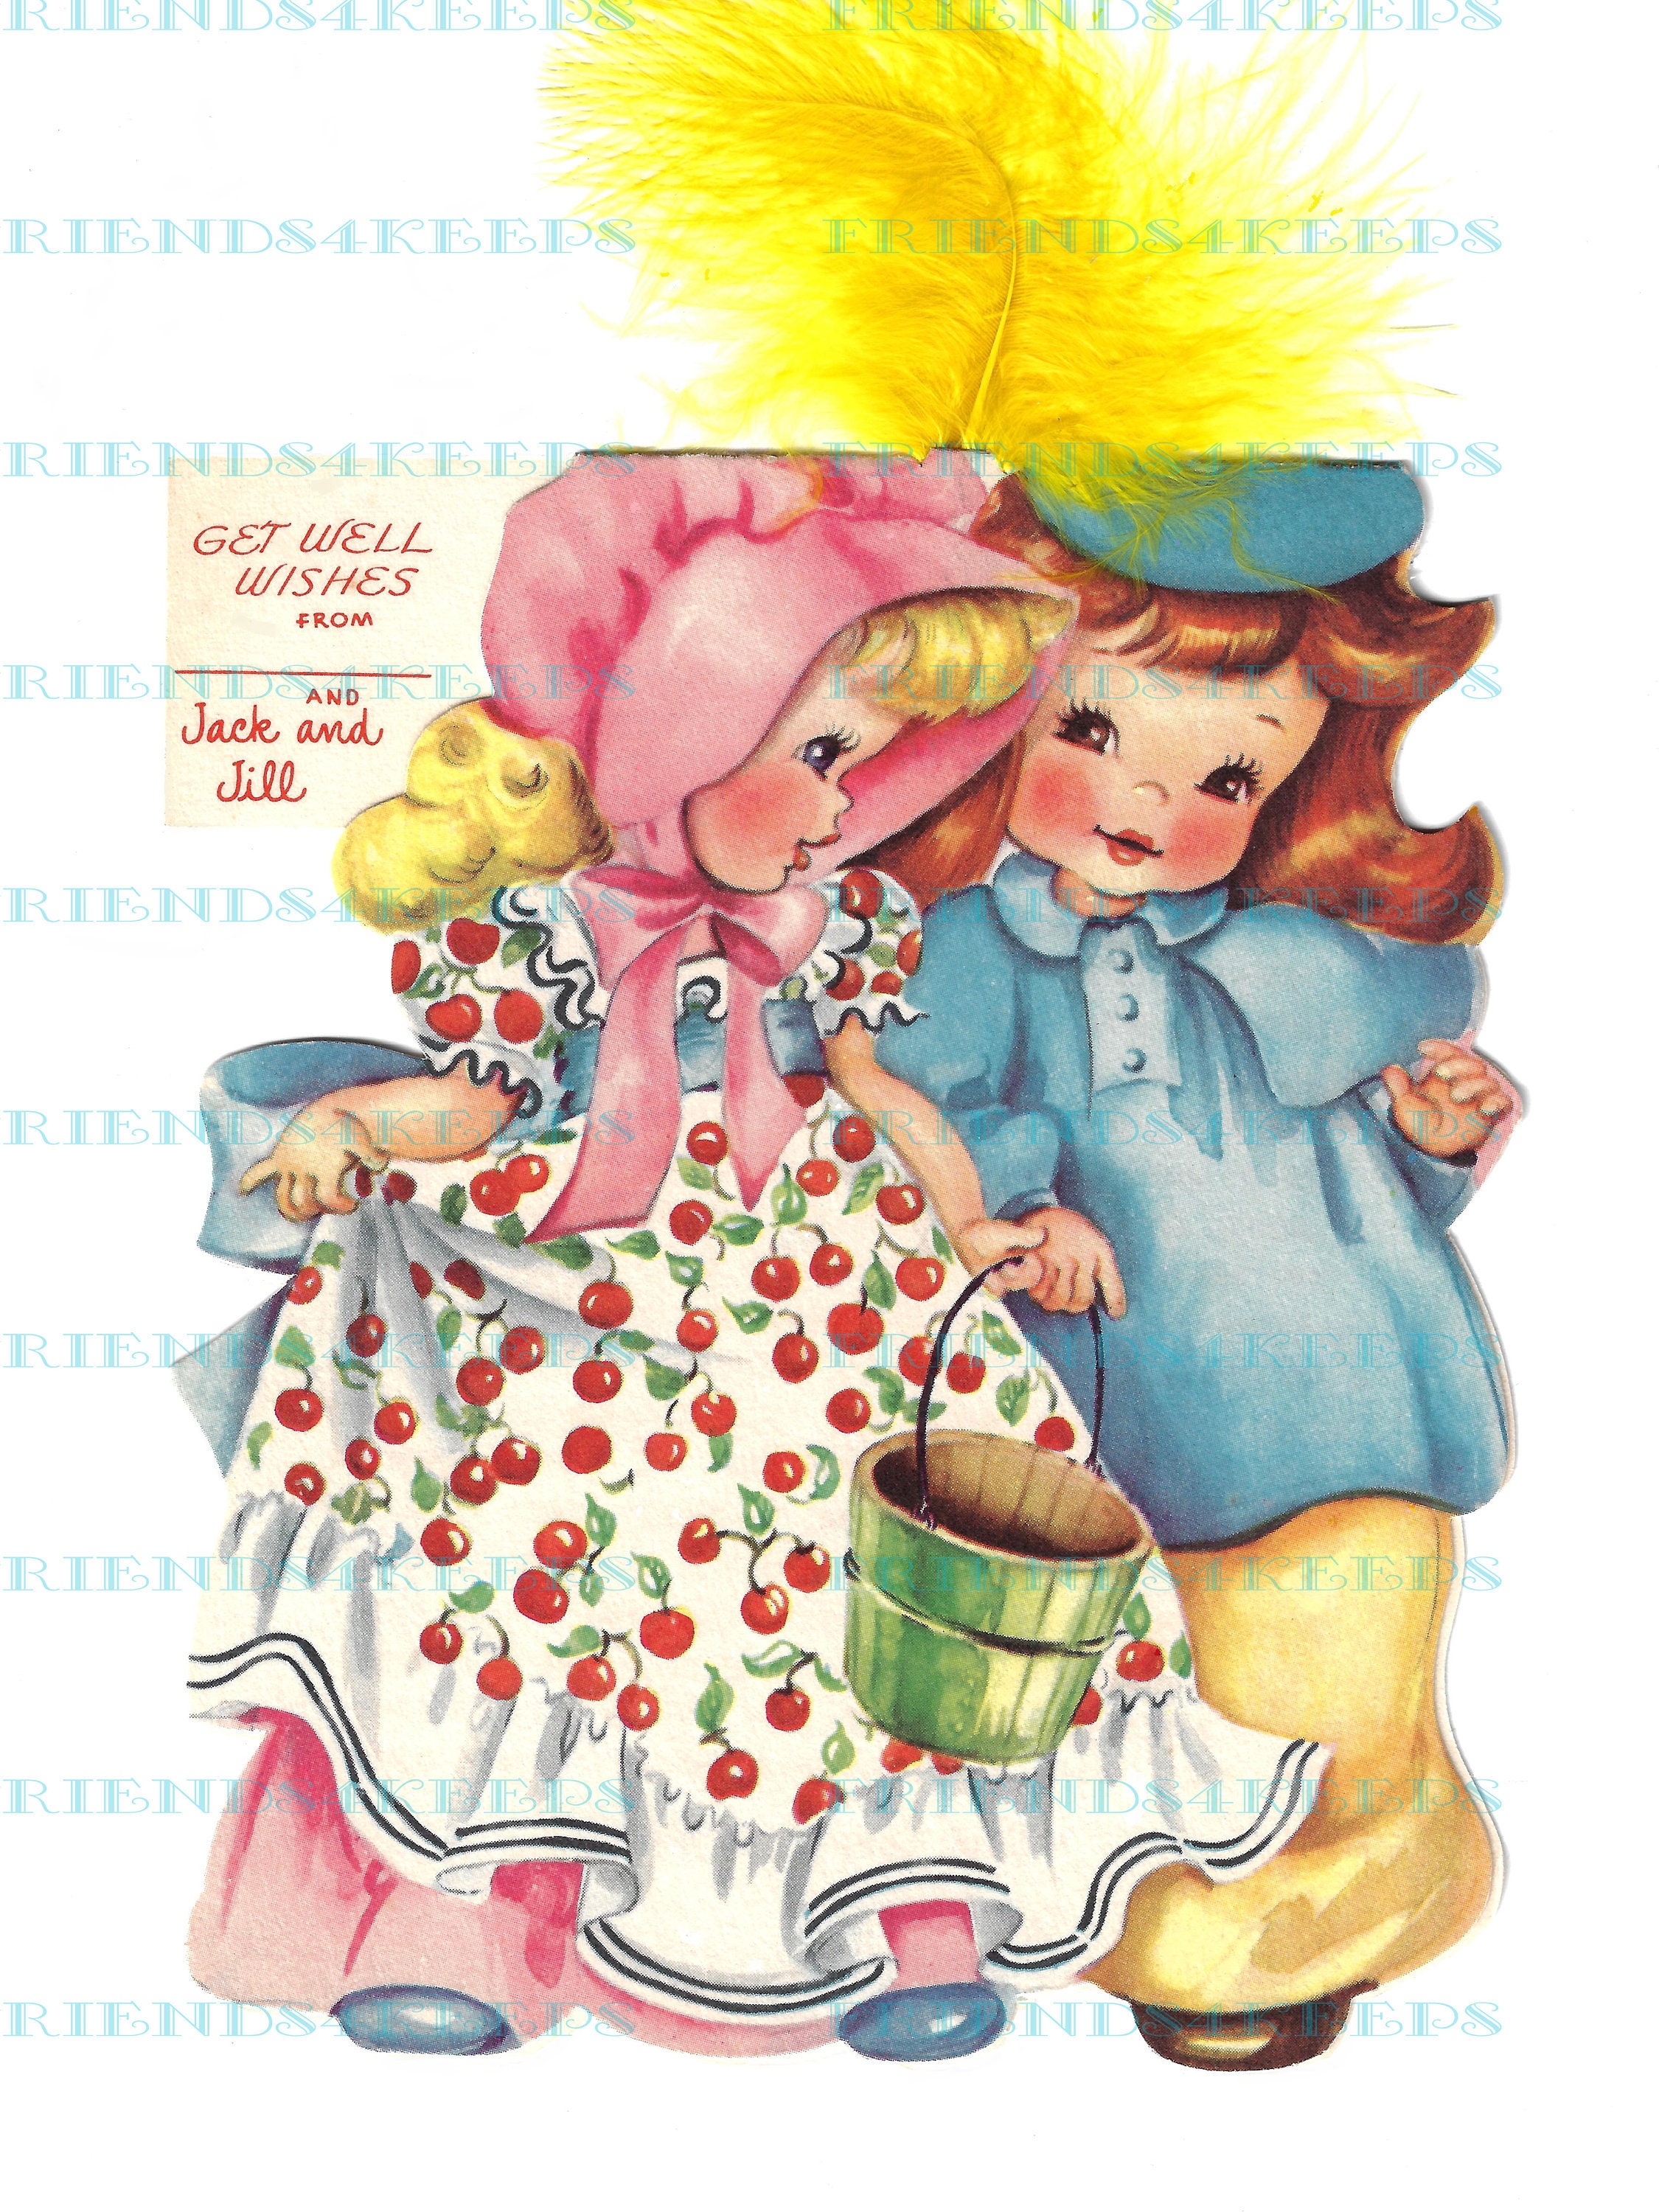 23 Printable Vintage Children's VALENTINE'S DAY Cards Digital